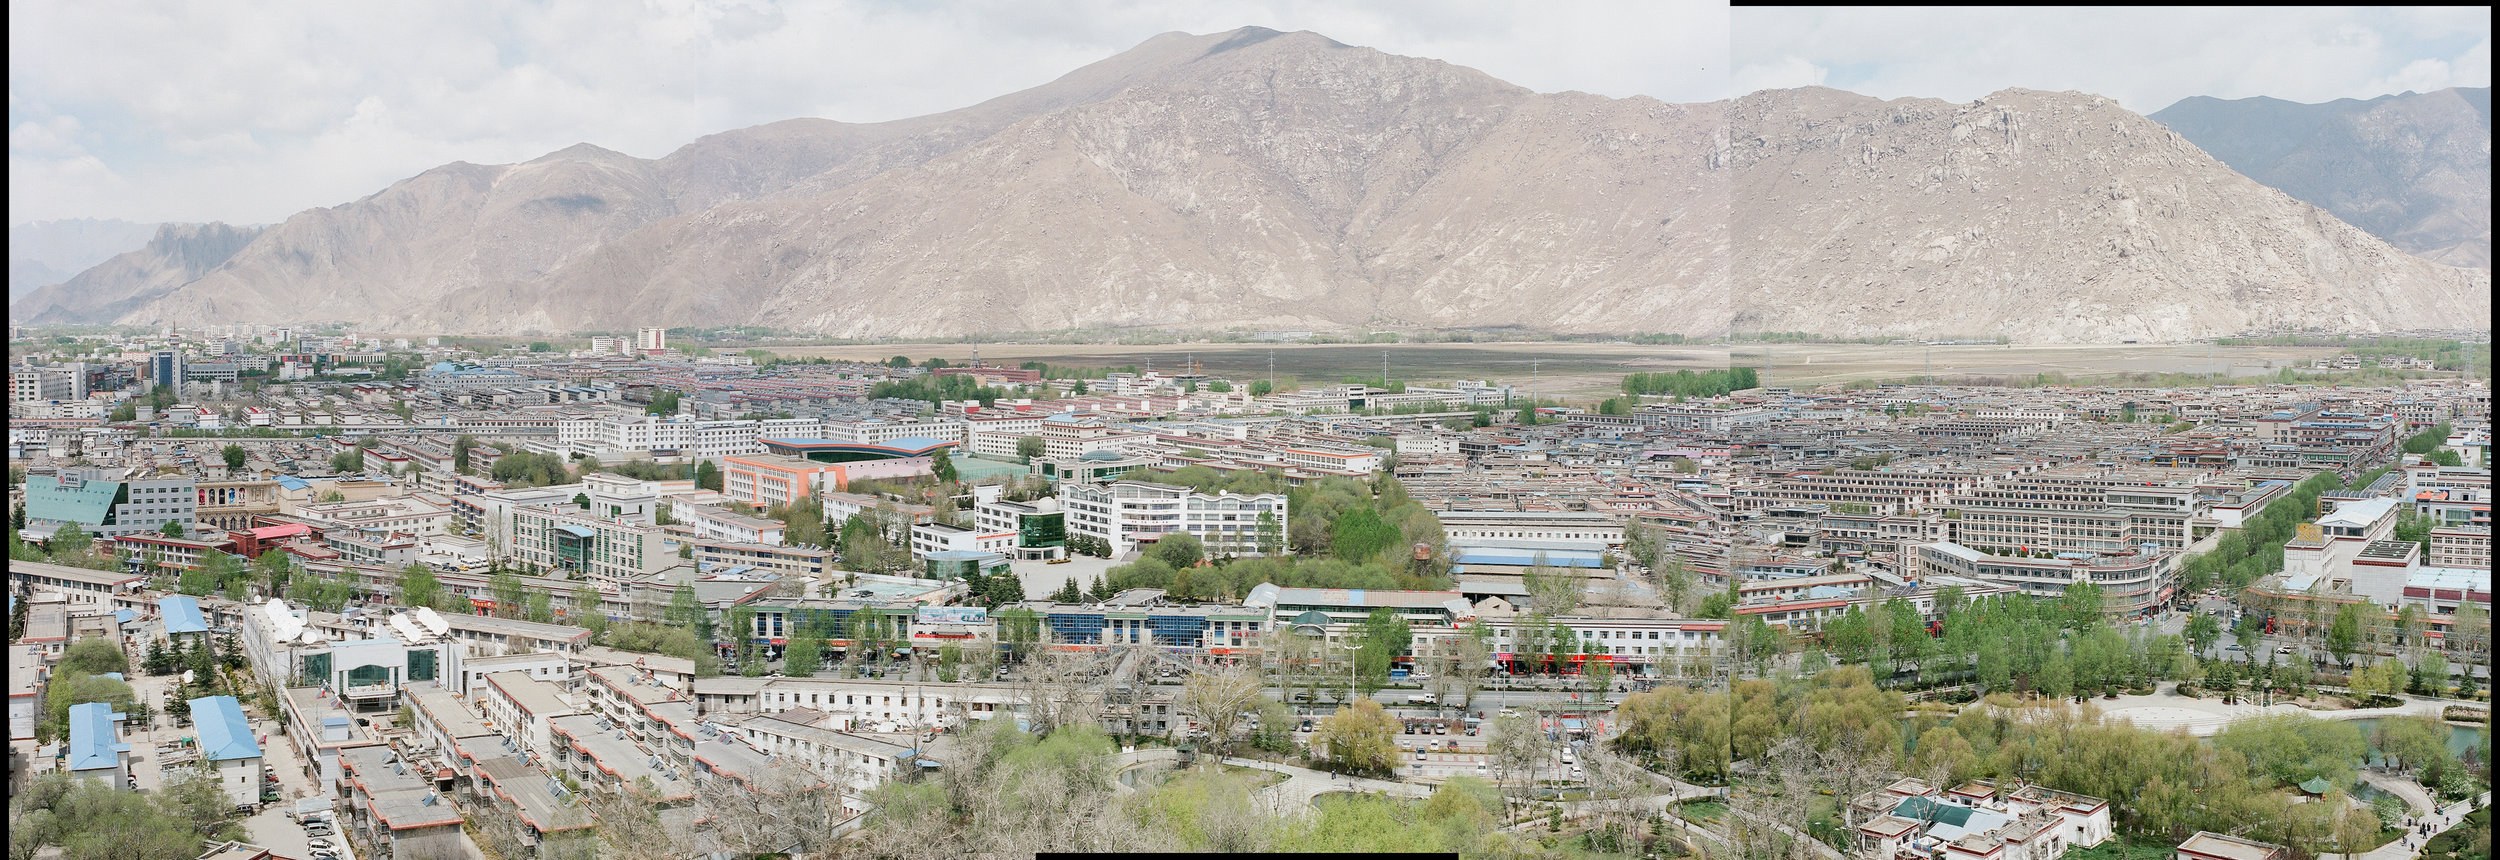  Lhasa, Tibet. 